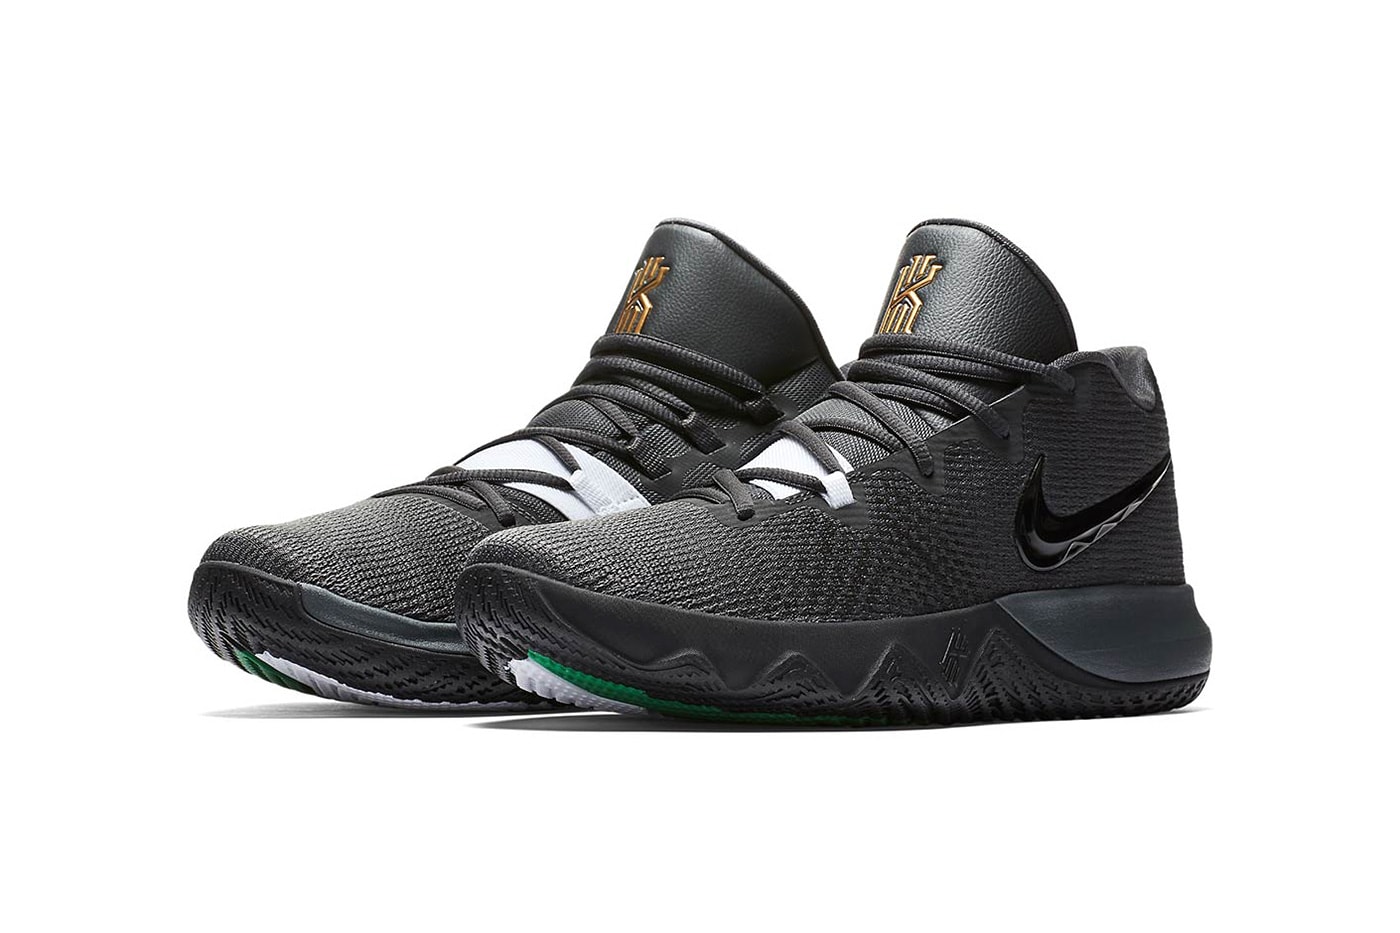 Nike Kyrie Flytrap Celtics Kyrie Irving nike basketball footwear 2018